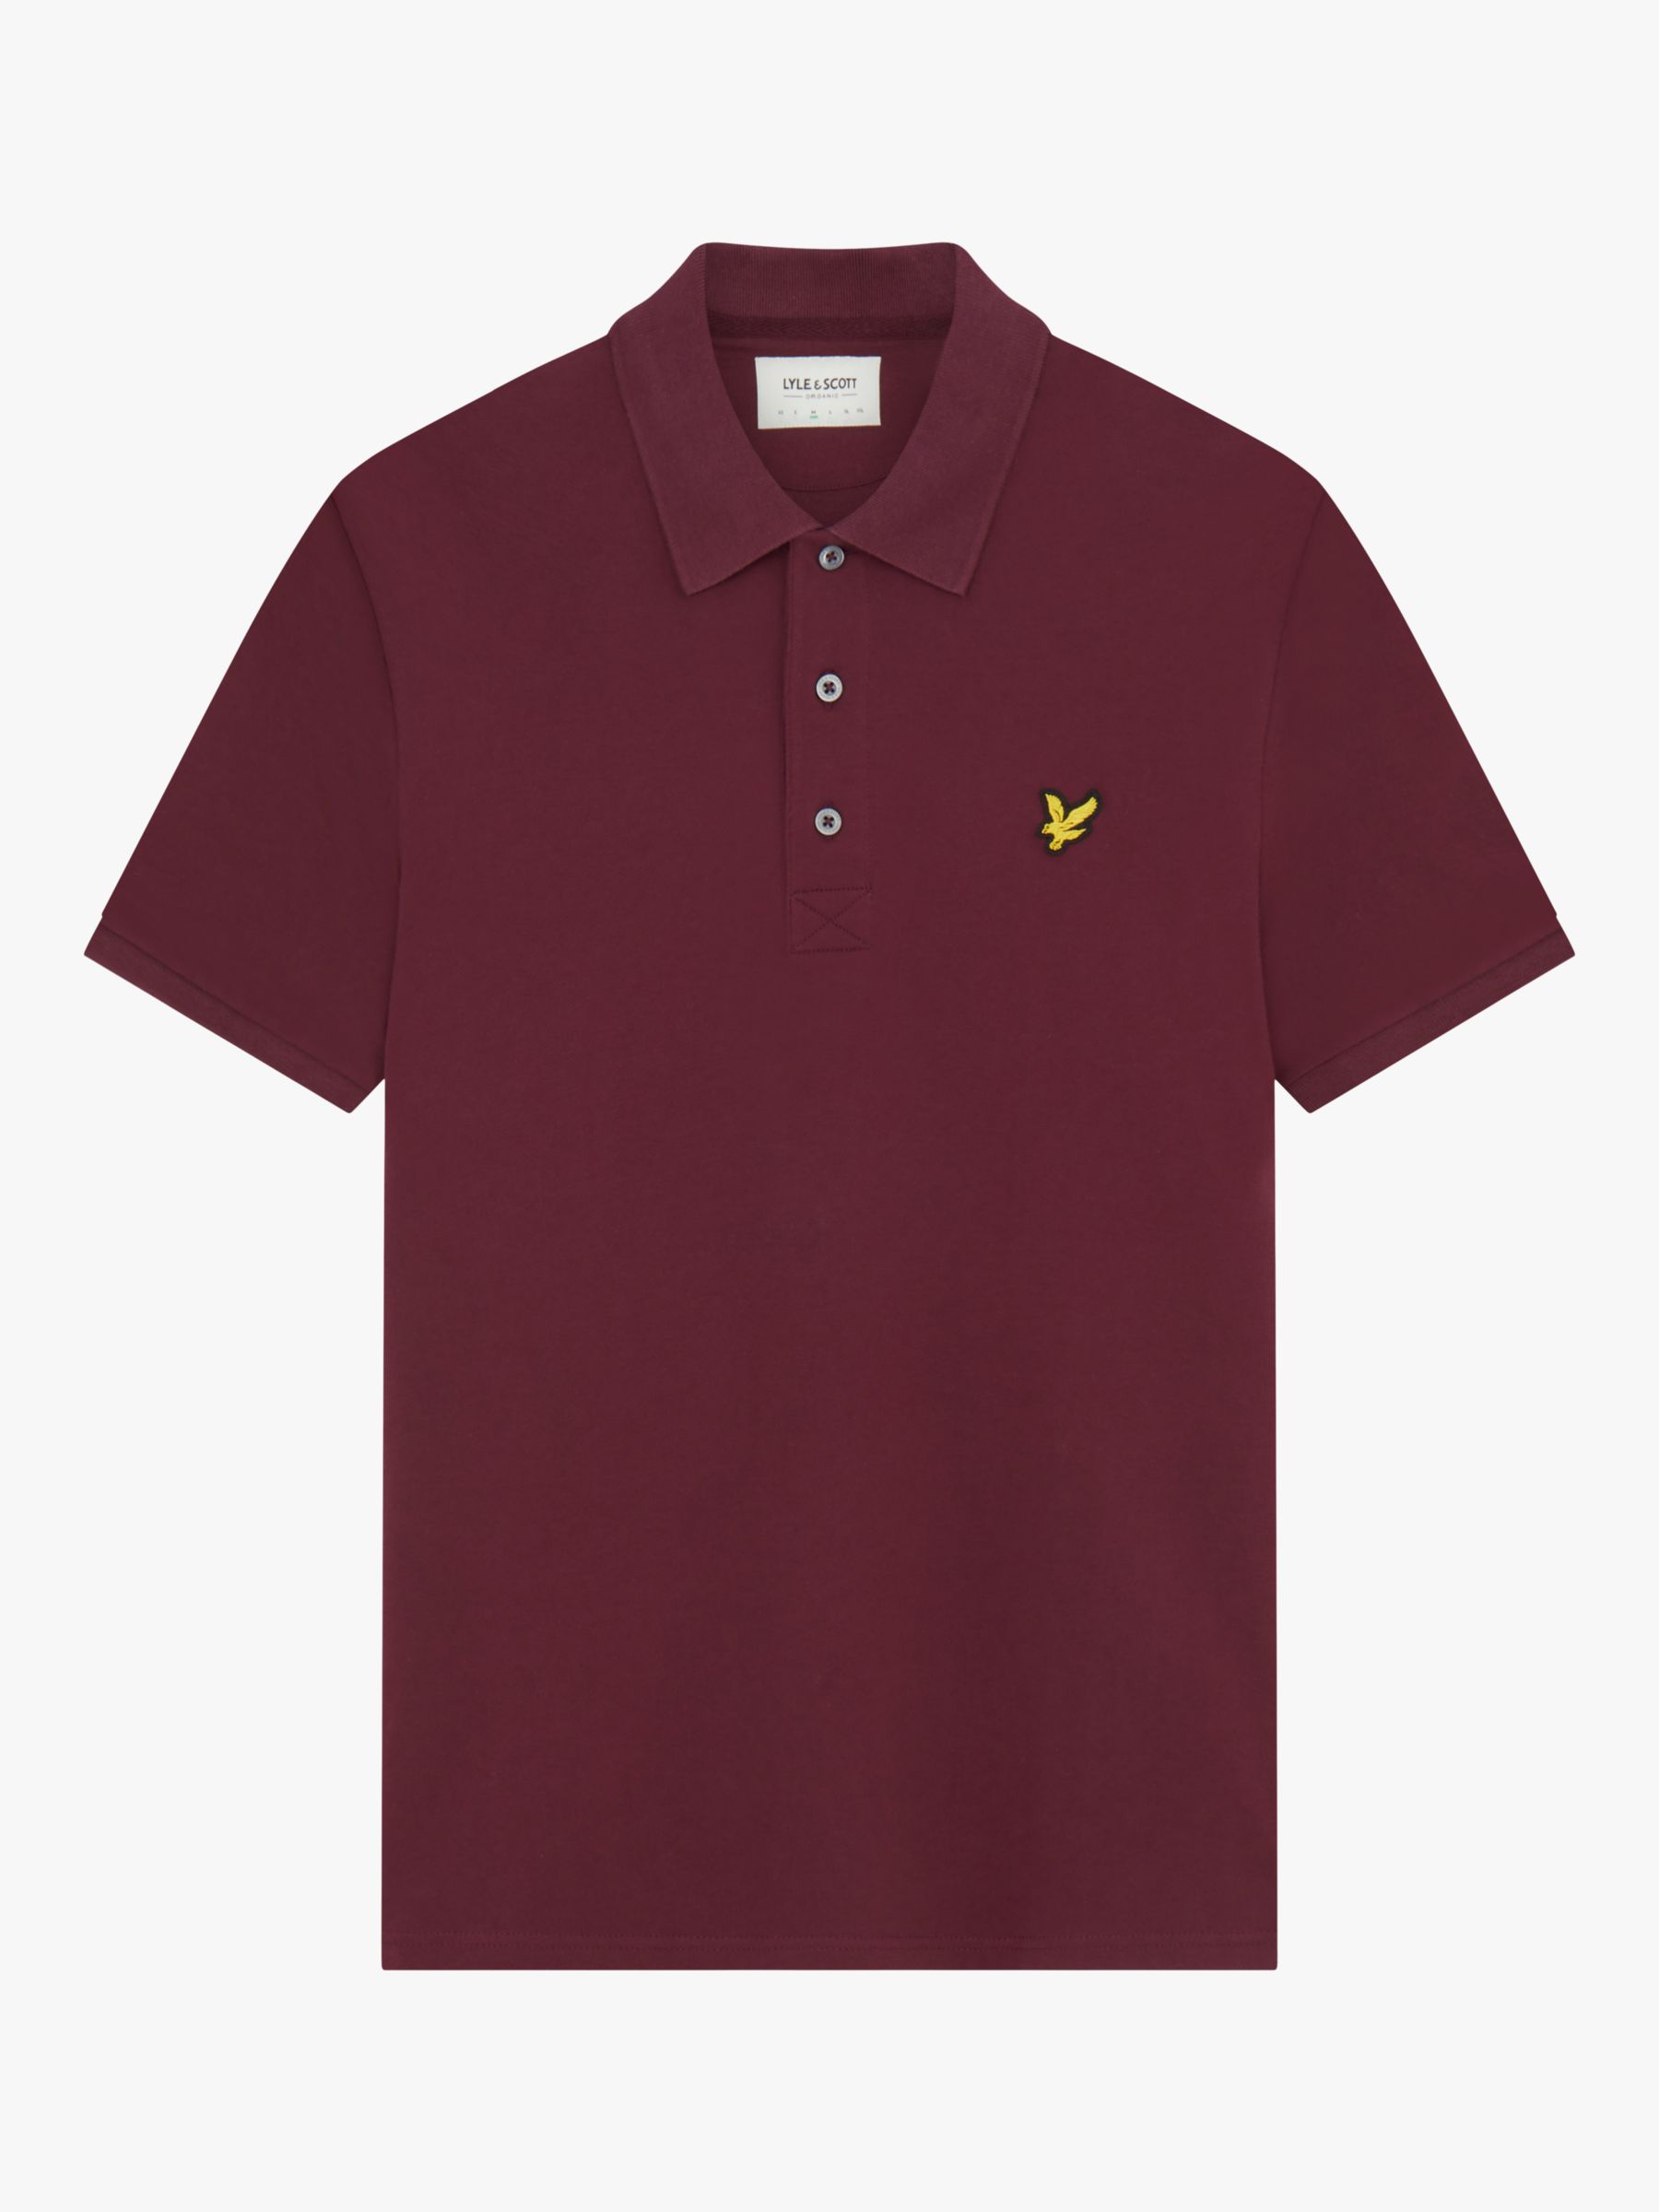 Lyle & Scott Short Sleeve Polo Shirt, Burgundy, XS